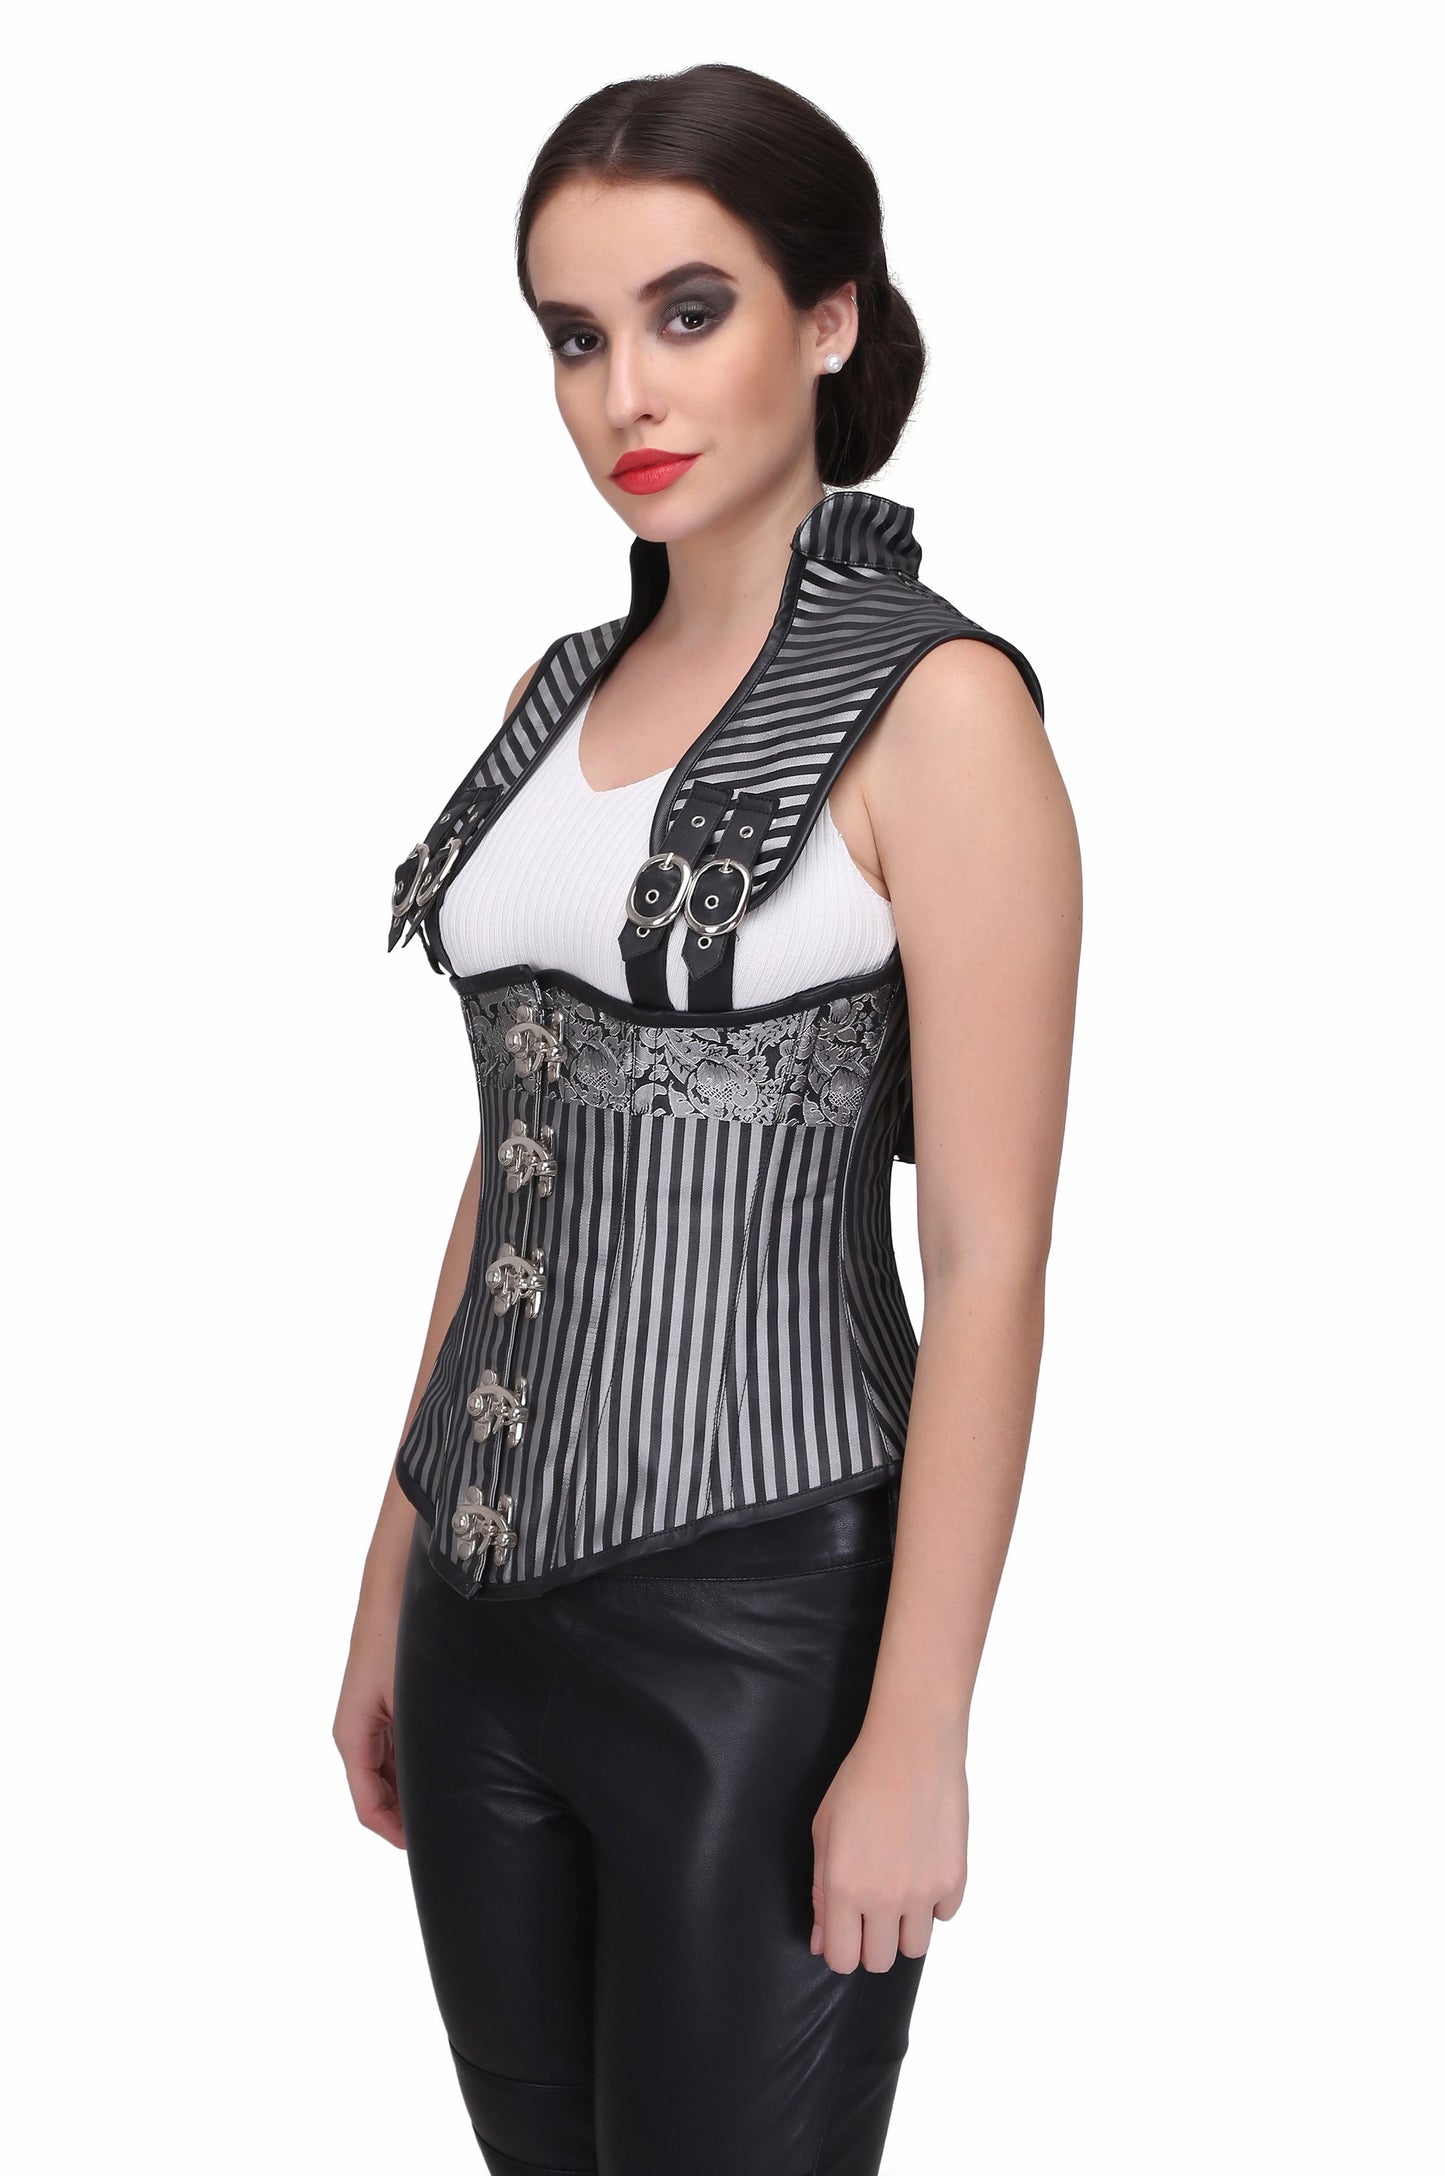 Black/silver brocade underbust corset top - Corset Revolution